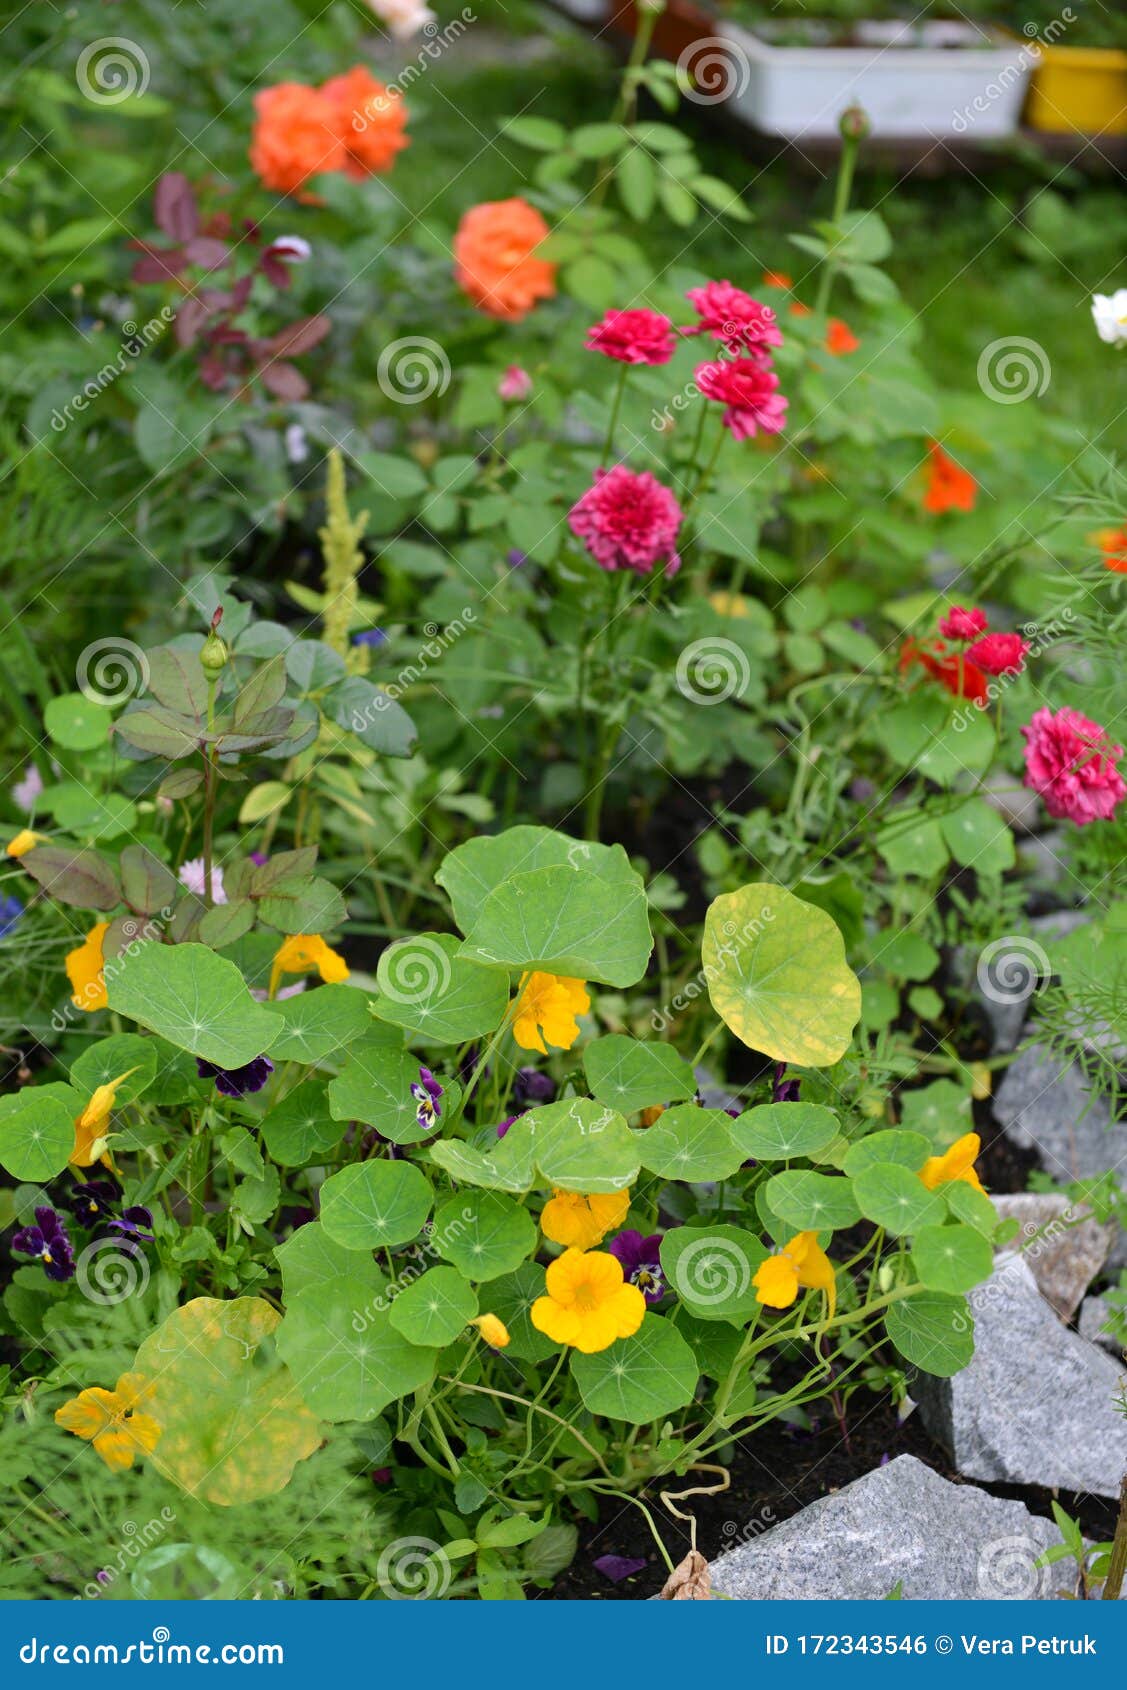 Flowerbed With Blooming Nasturtium Ranunculus And Orange Rose Flowers Stock Photo Image Of Hobby Beautiful 172343546